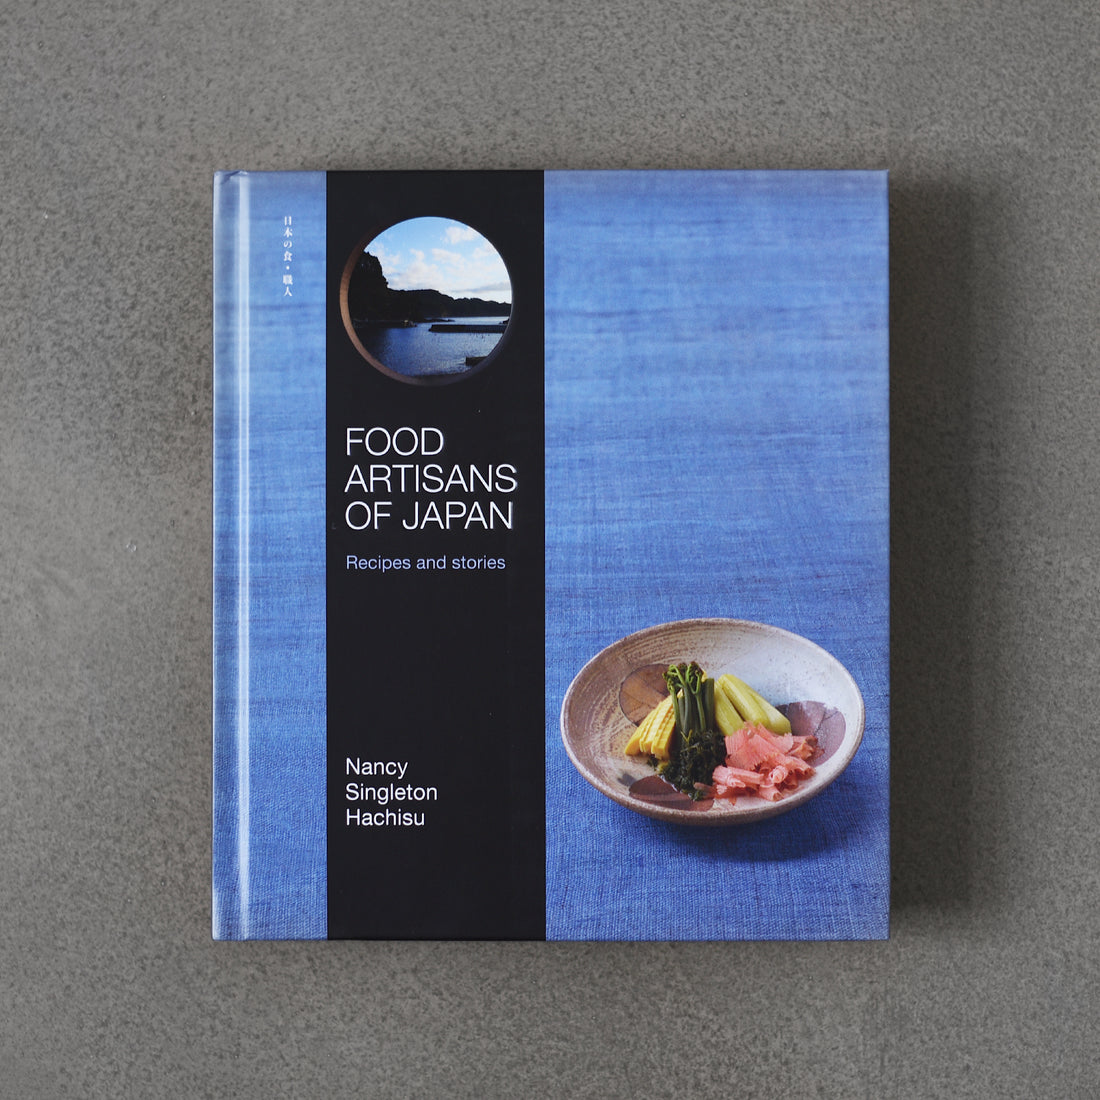 Artyści kulinarni z Japonii: przepisy kulinarne i historie